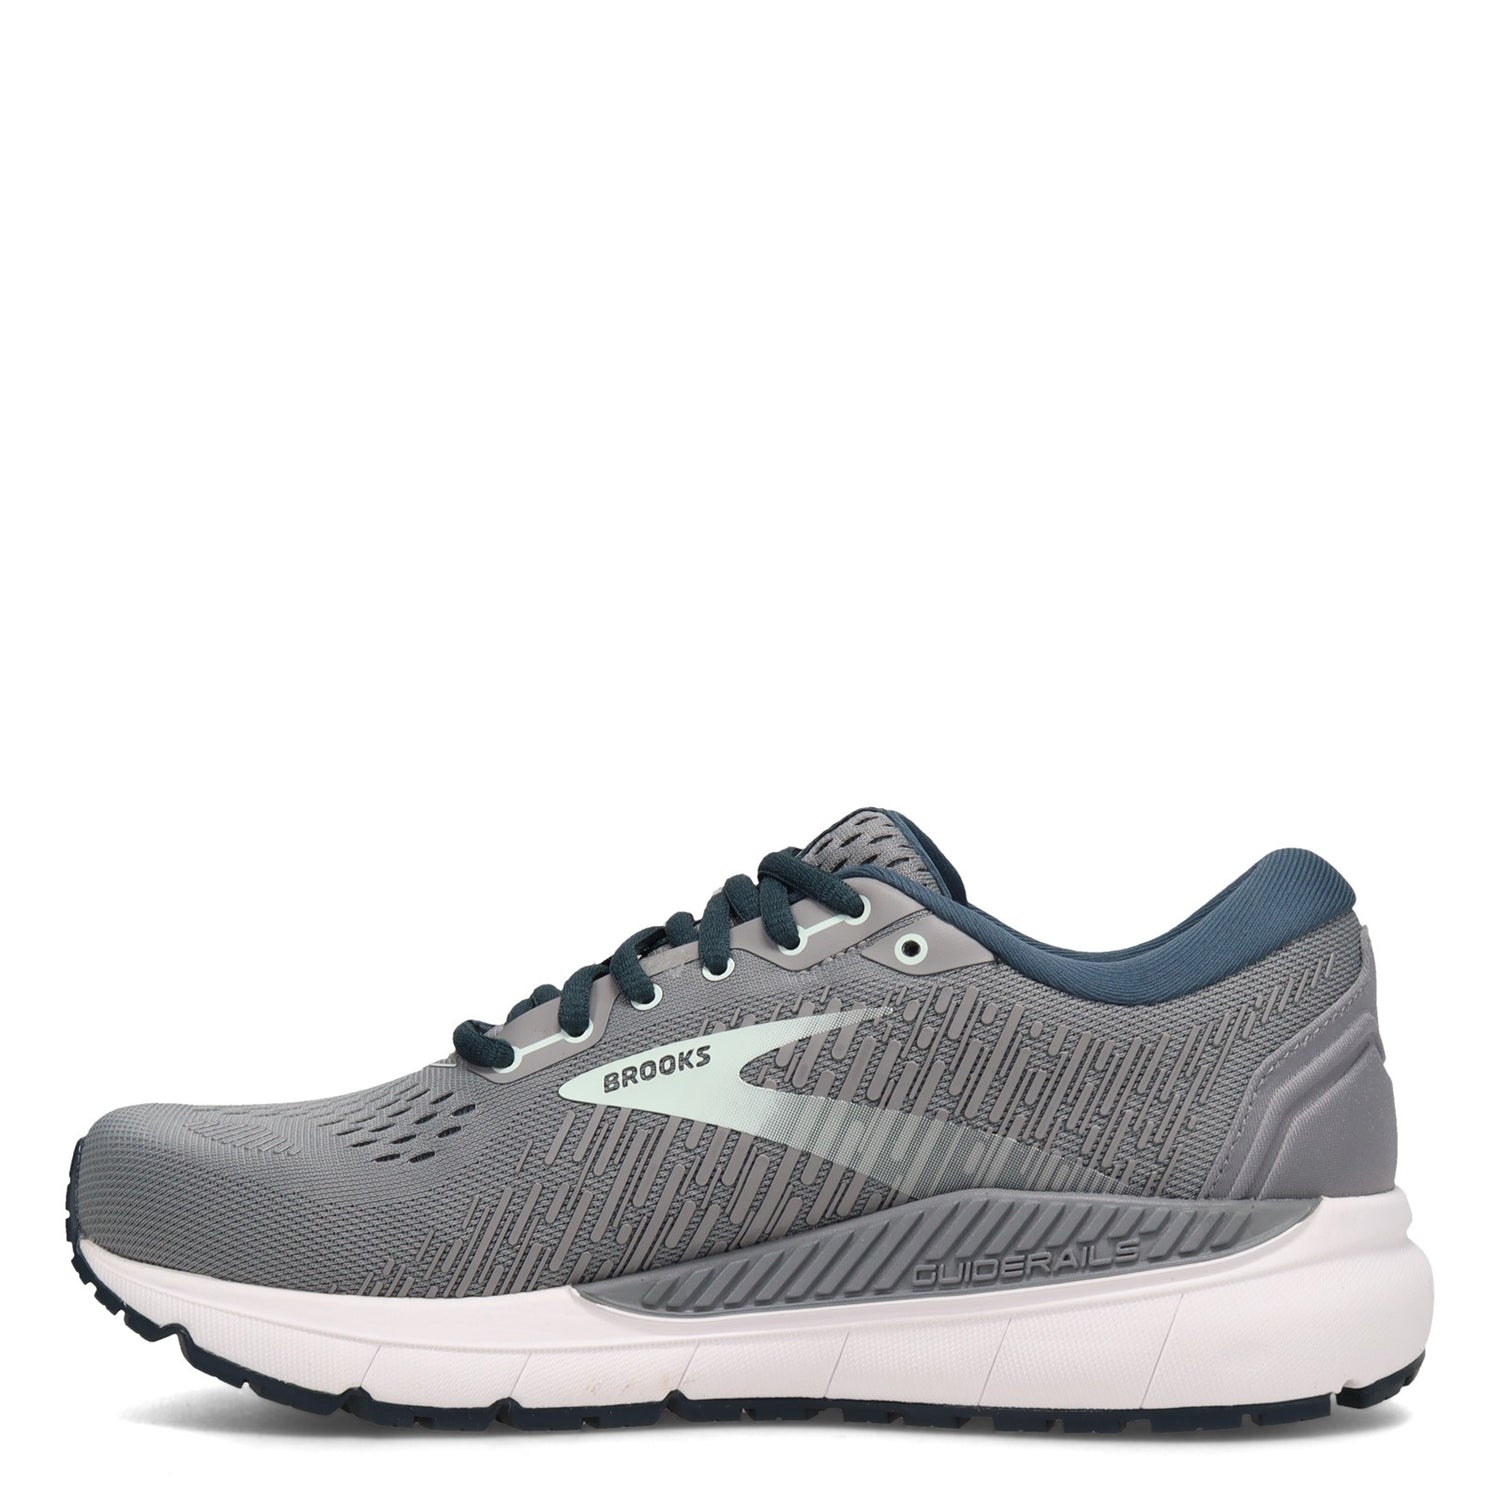 Peltz Shoes  Women's Brooks Addiction GTS 15 Running Shoe Grey/Navy 120352 1B 099